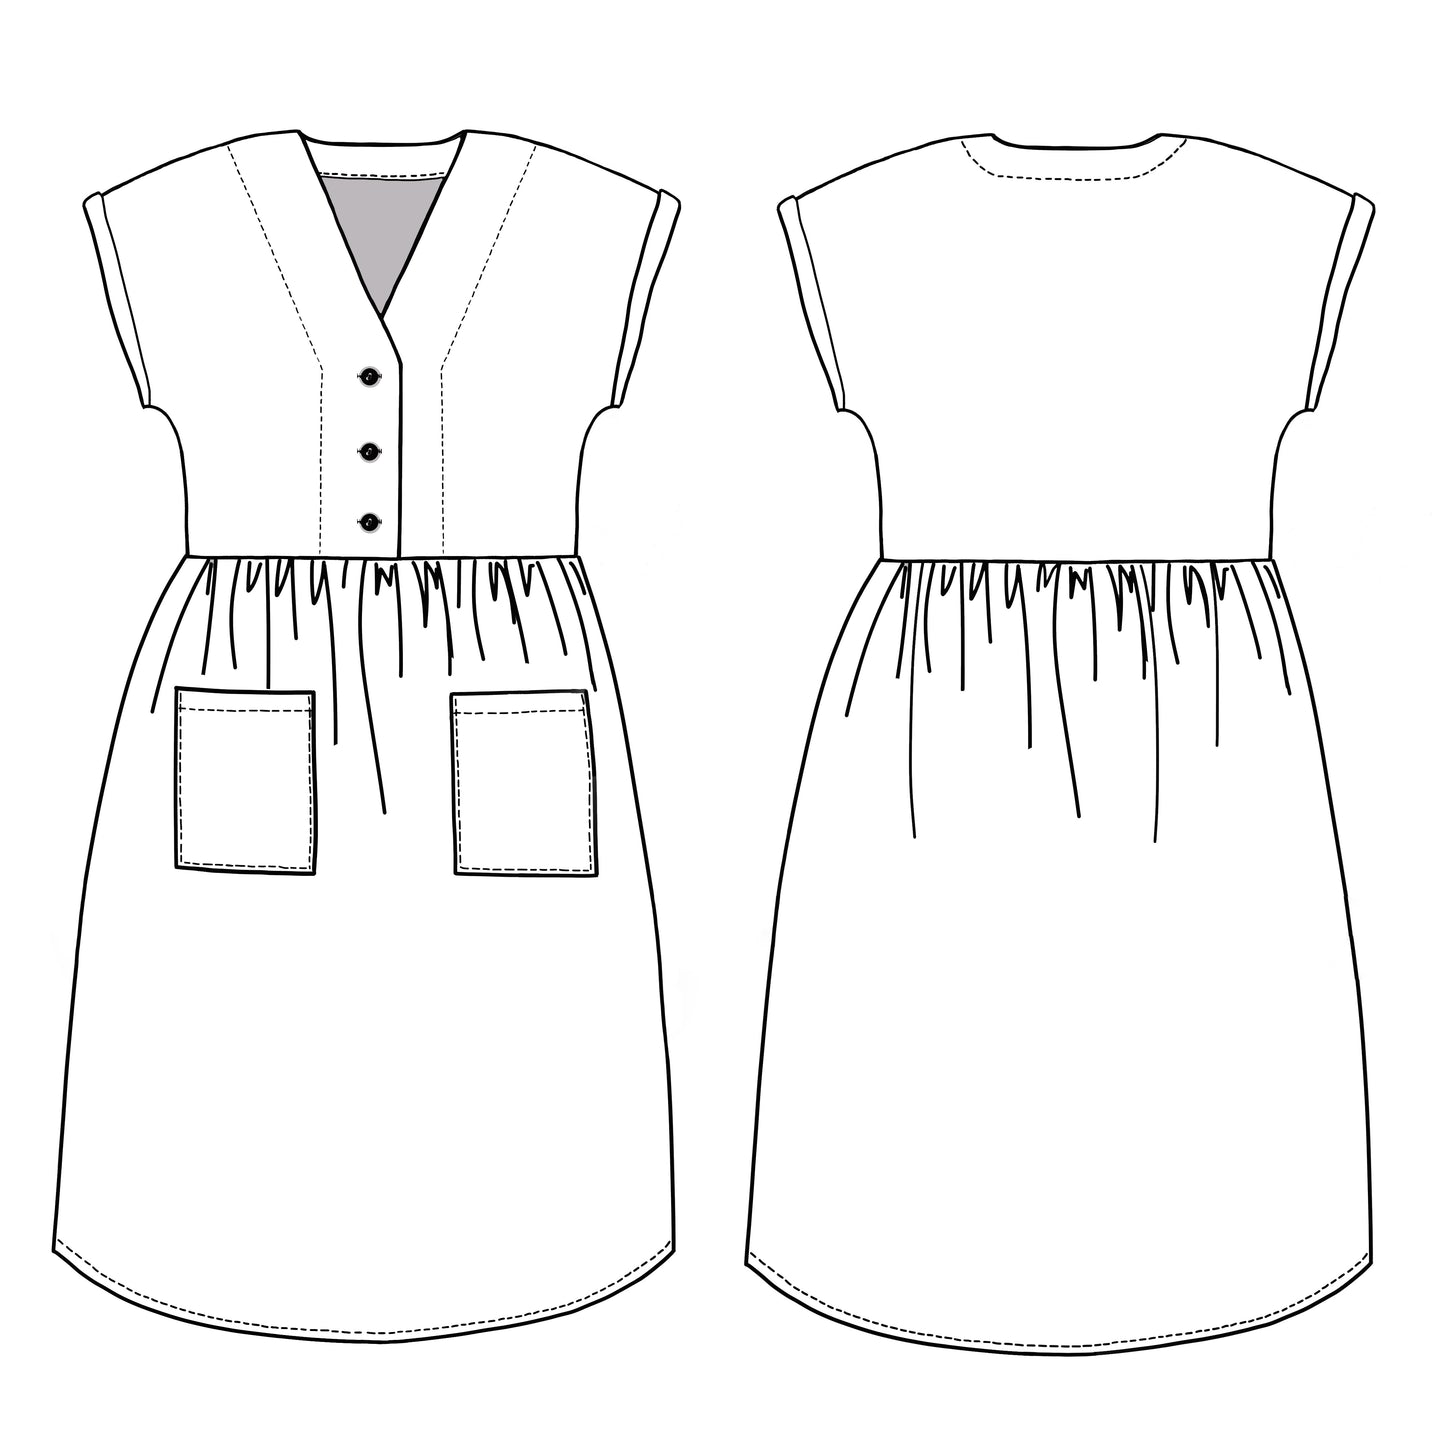 BEATRICE dress sewing pattern